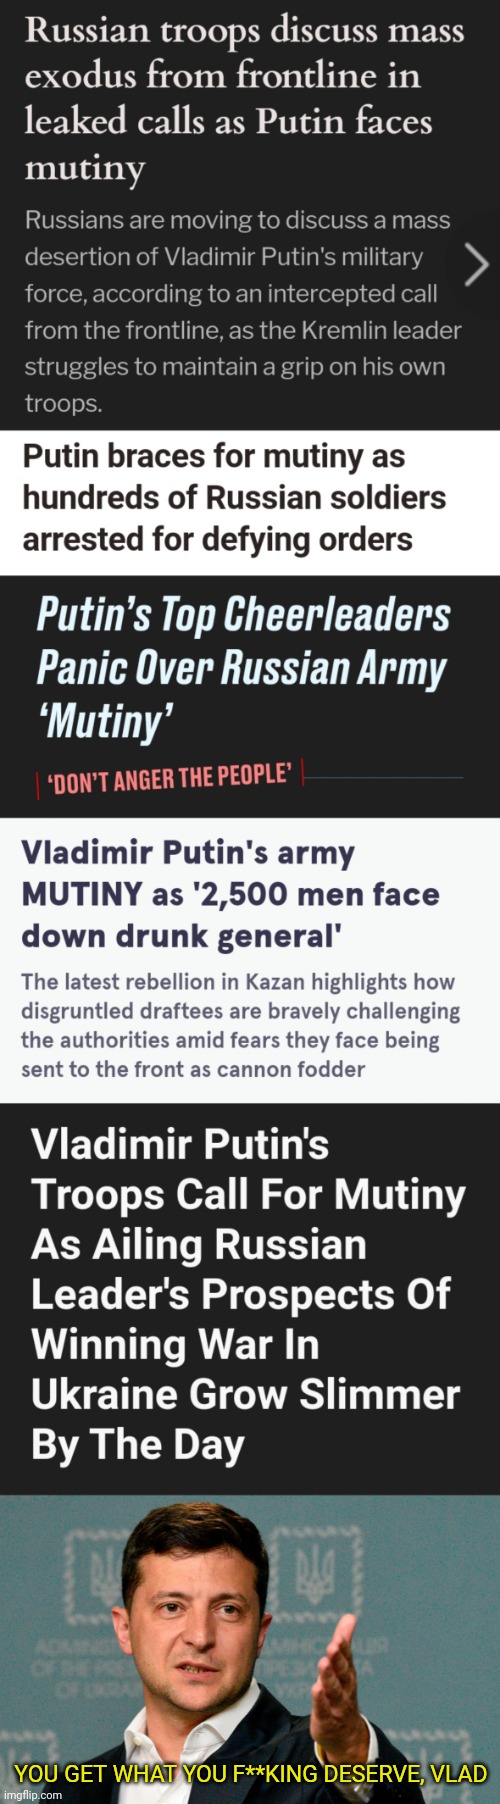 YOU GET WHAT YOU F**KING DESERVE, VLAD | image tagged in ukrainian lives matter,russian lives matter,overthrow putin,alpha jew zelensky | made w/ Imgflip meme maker